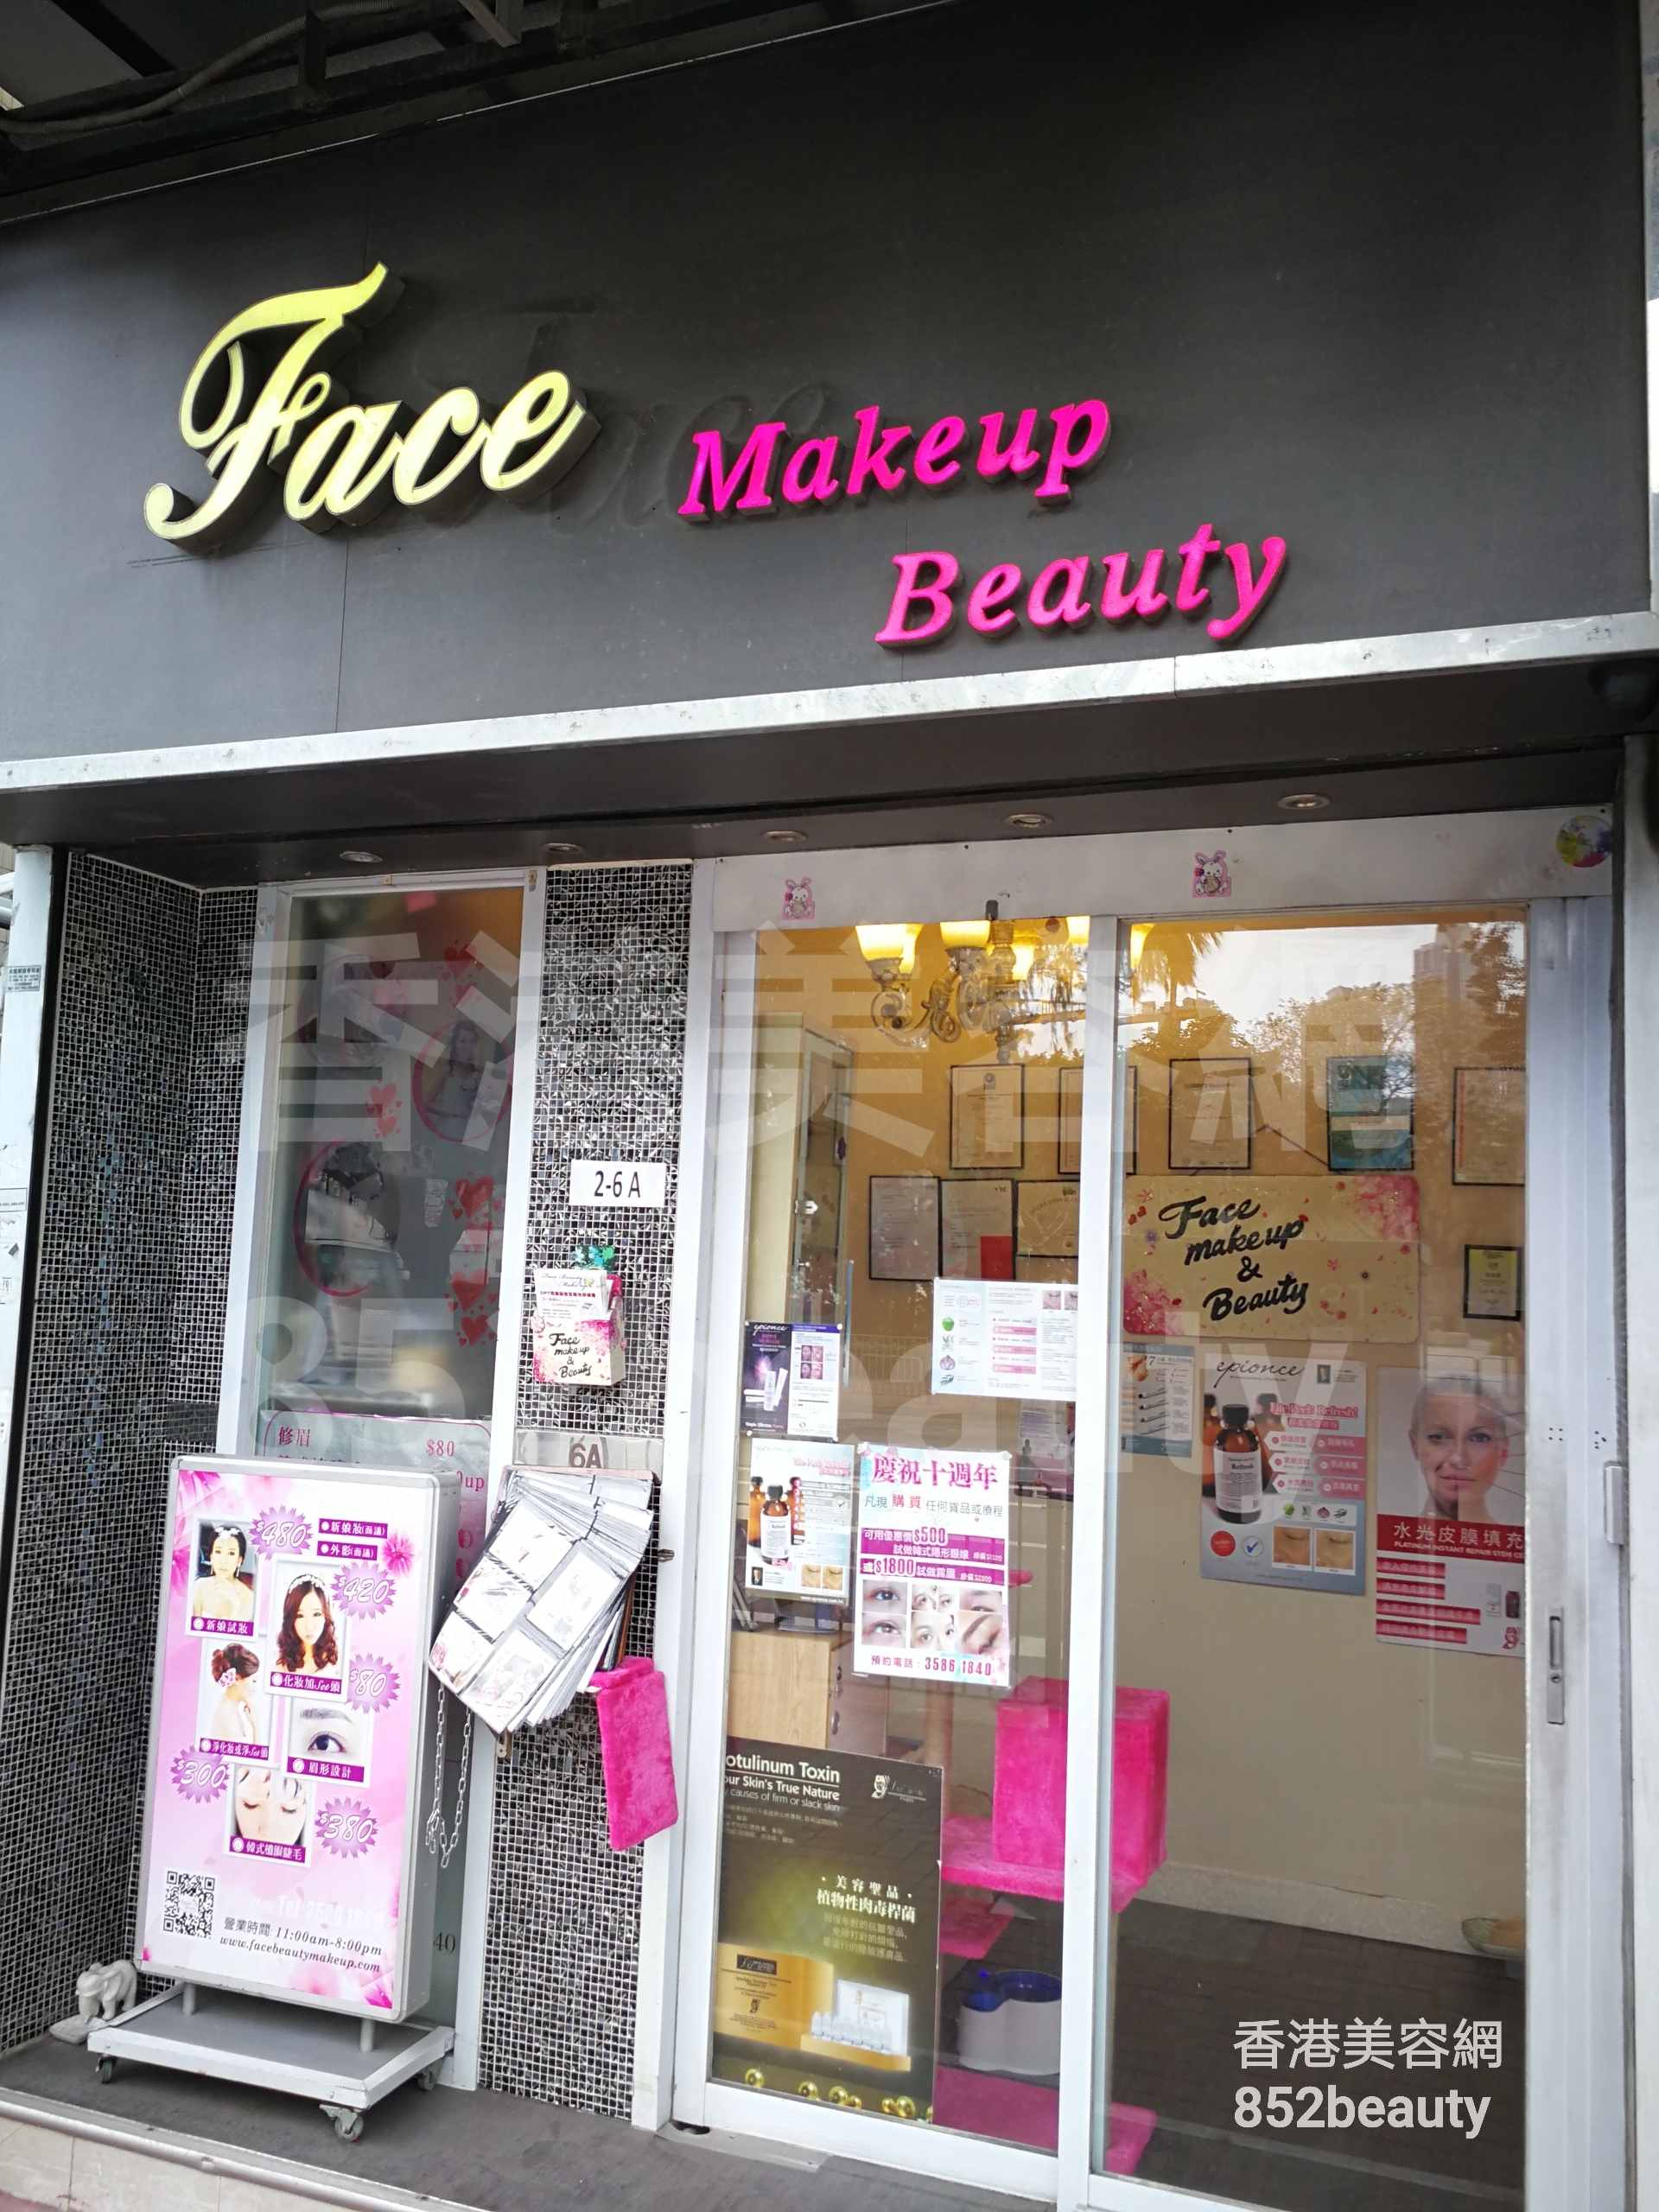 香港美容網 Hong Kong Beauty Salon 美容院 / 美容師: Face Makeup Beauty